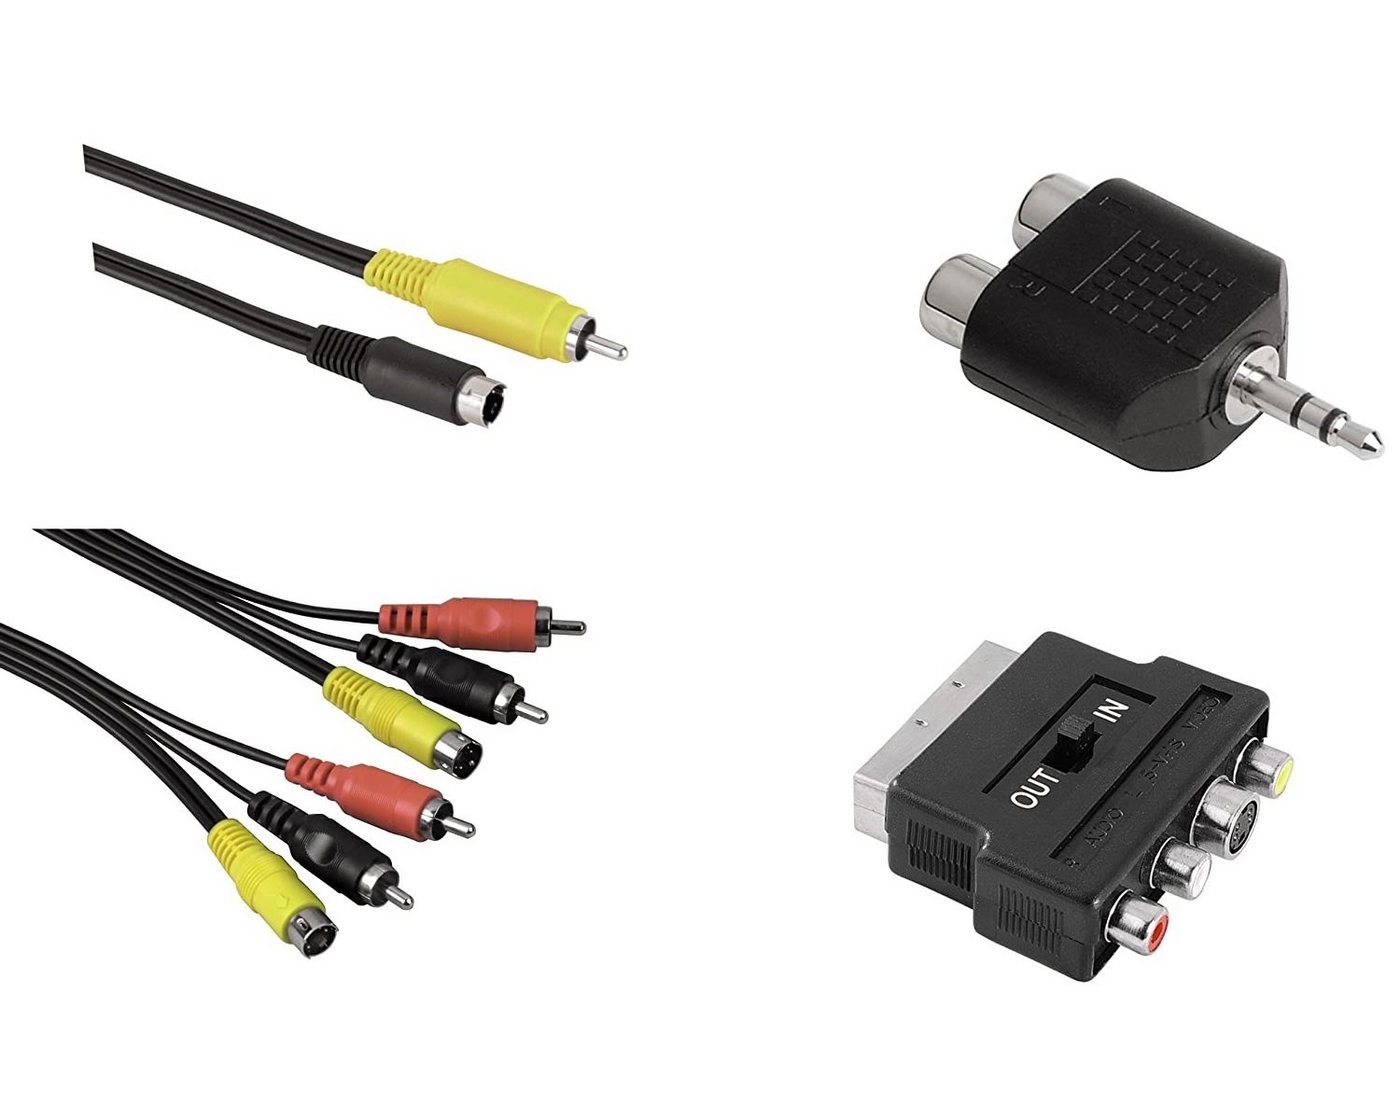 Hama Kabel-Set 5m S-Video 2x Cinch-Kabel Scart Audio-Kabel, Scart,S-Video,Cinch,3,5-mm-Klinke, (500 cm), Komplett-Set Anschluss-Kabel Scart-Adapter Klinken-Adapter, Universal von Hama